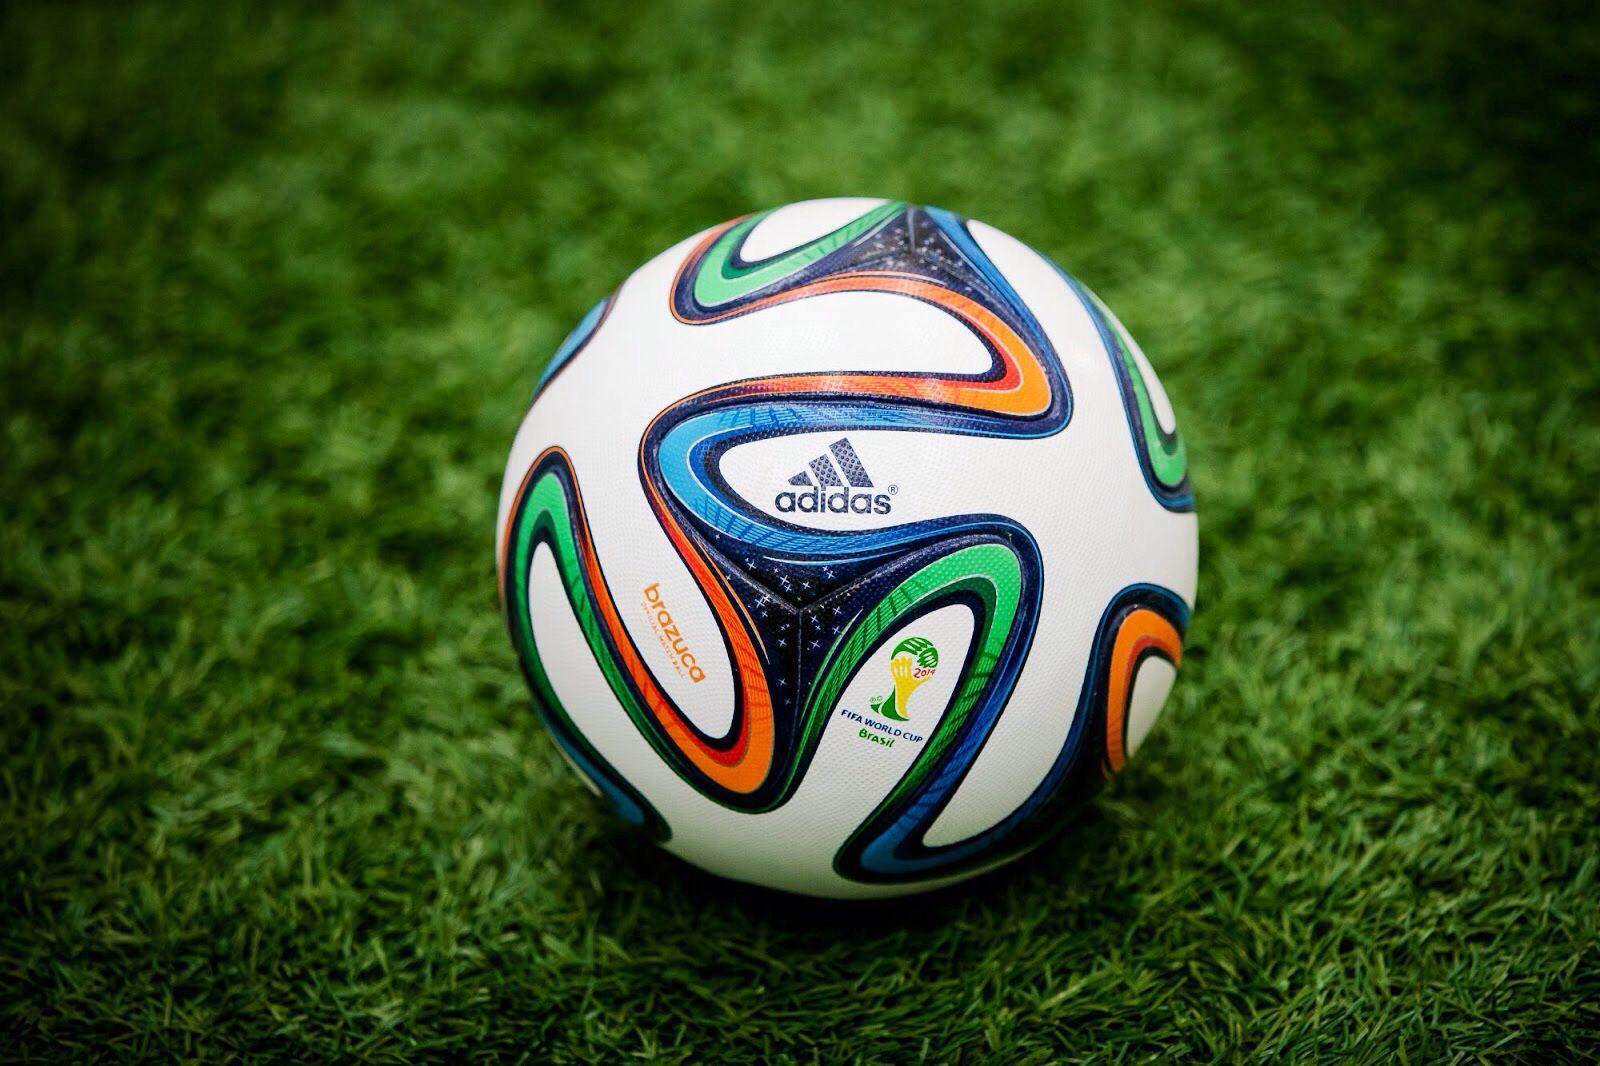 Brazuka by Adidas, World Cup 2014. Adidas Football 'Then & Now